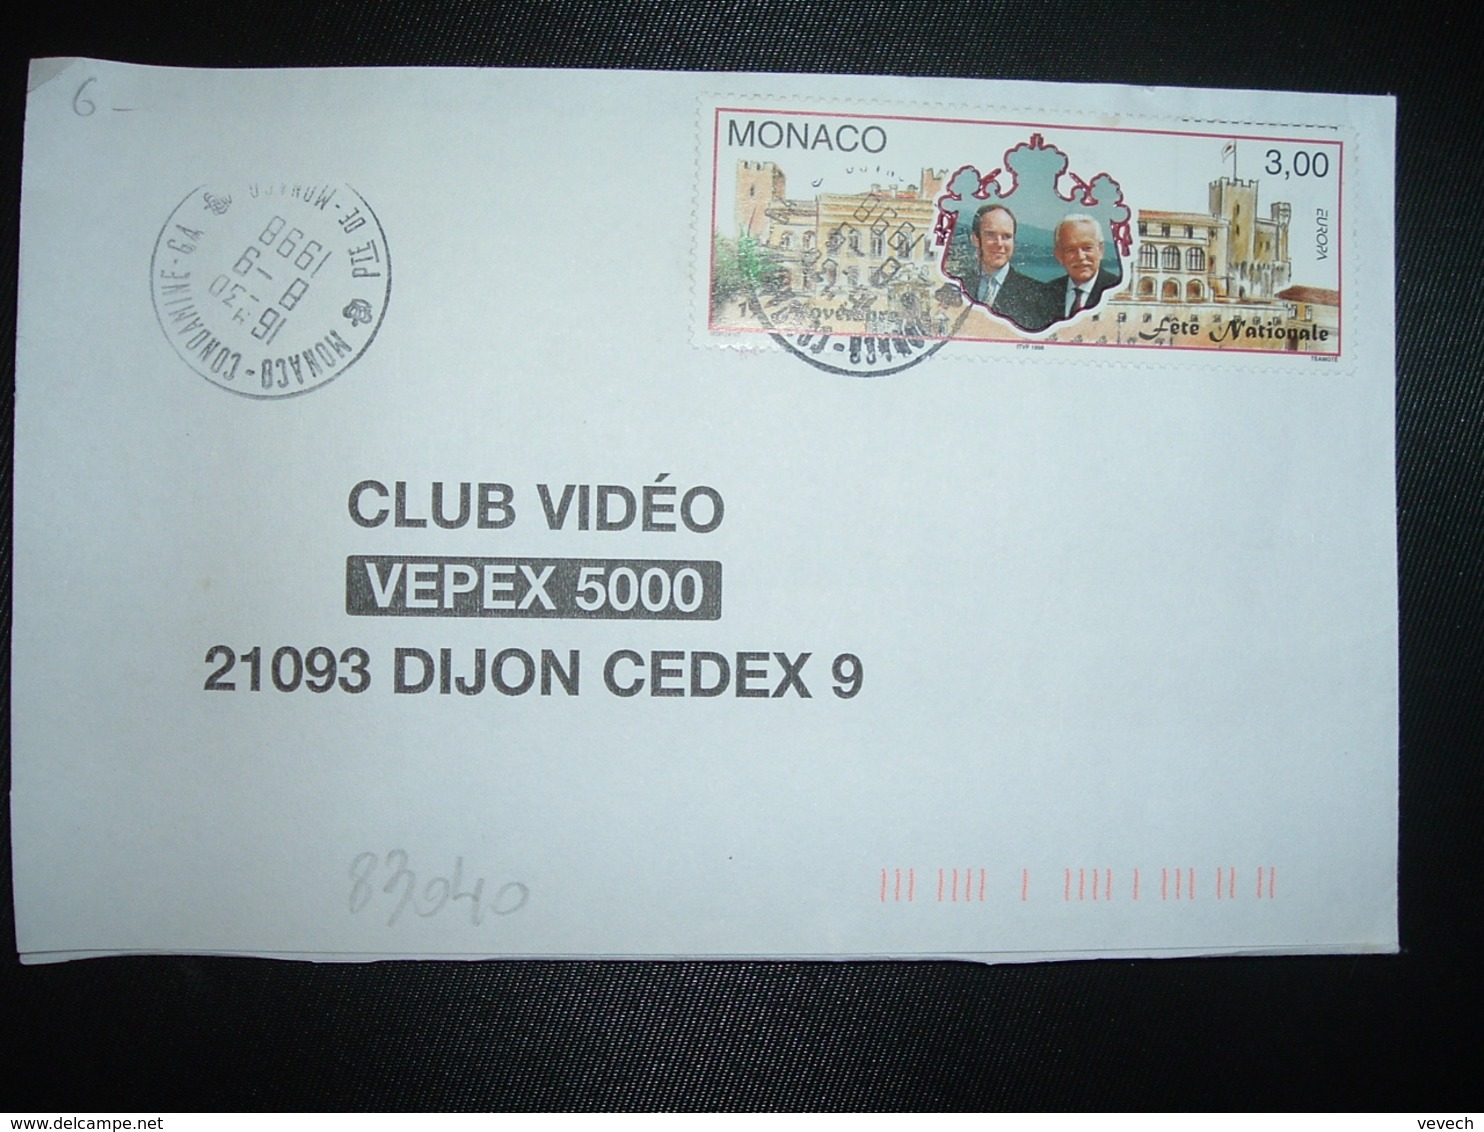 LETTRE TP EUROPA FETE NATIONALE 3,00 OBL.8-9 1998 MONACO CONDAMINE GA (GUICHET ANNEXE) - Lettres & Documents